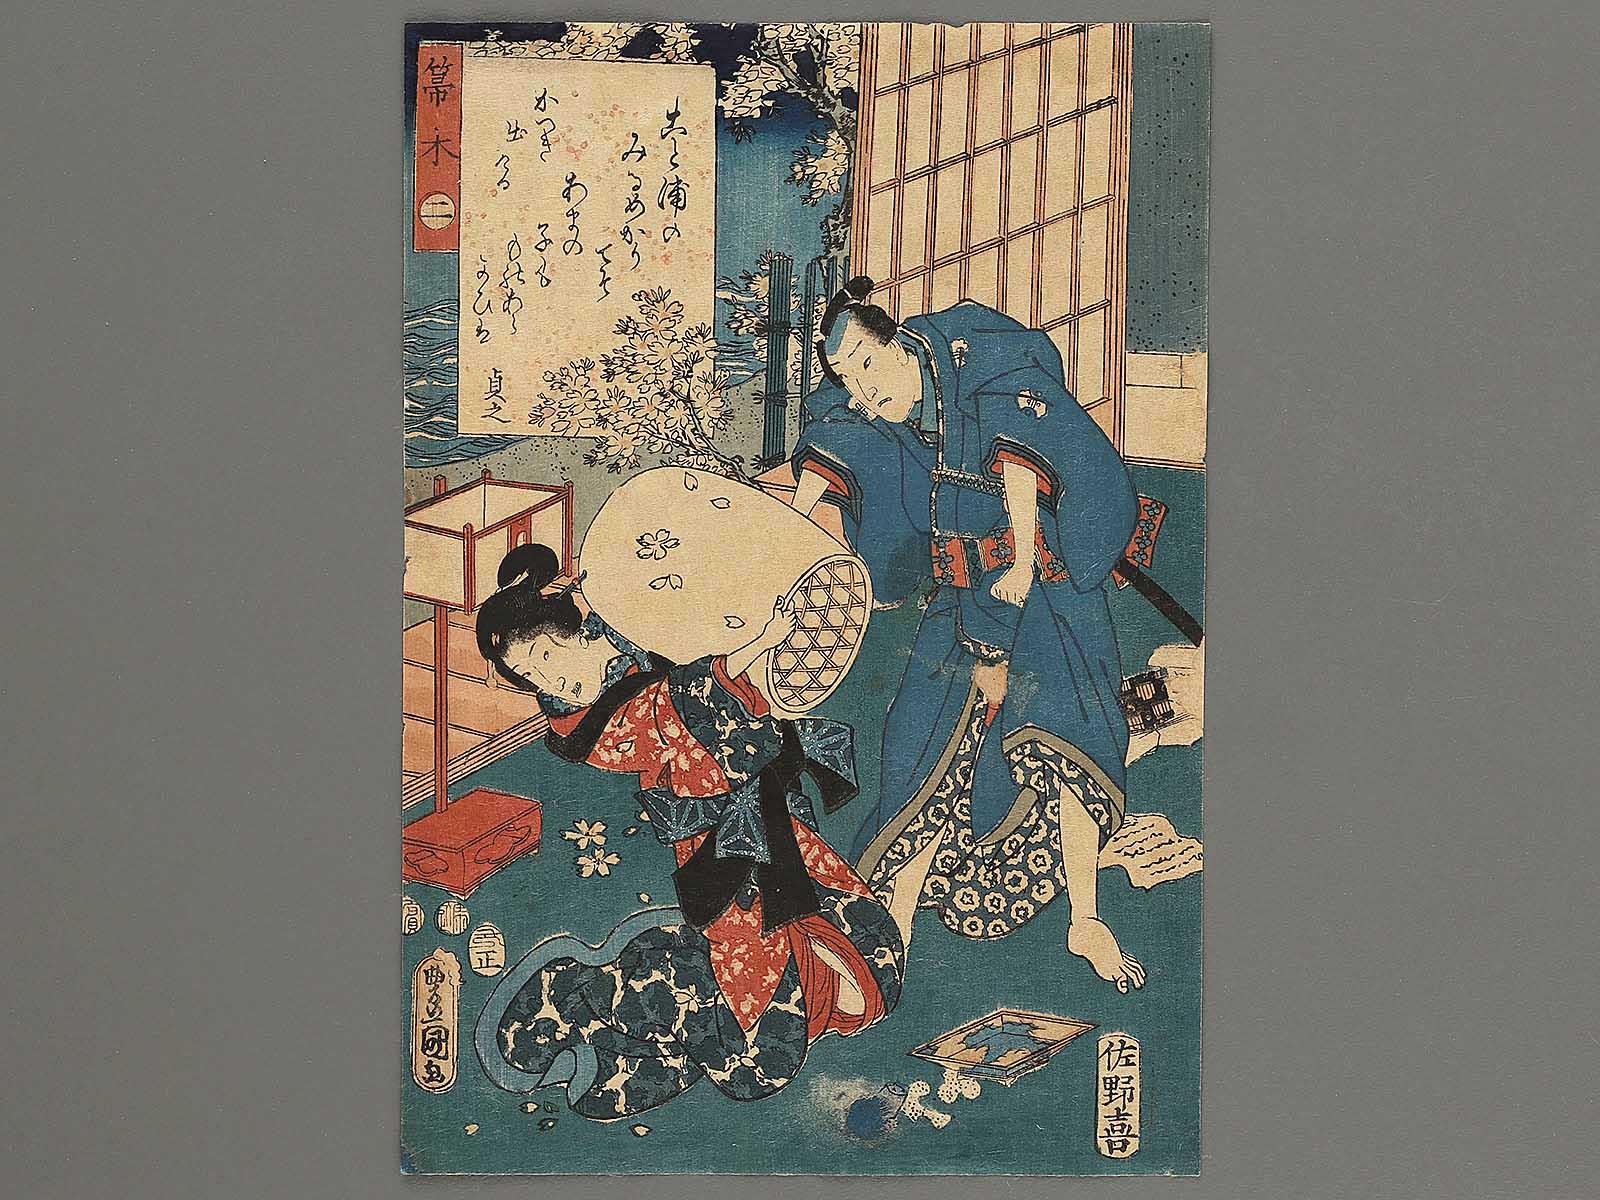 Hahakigi from the series Imagenji nishikie awase by Utagawa 